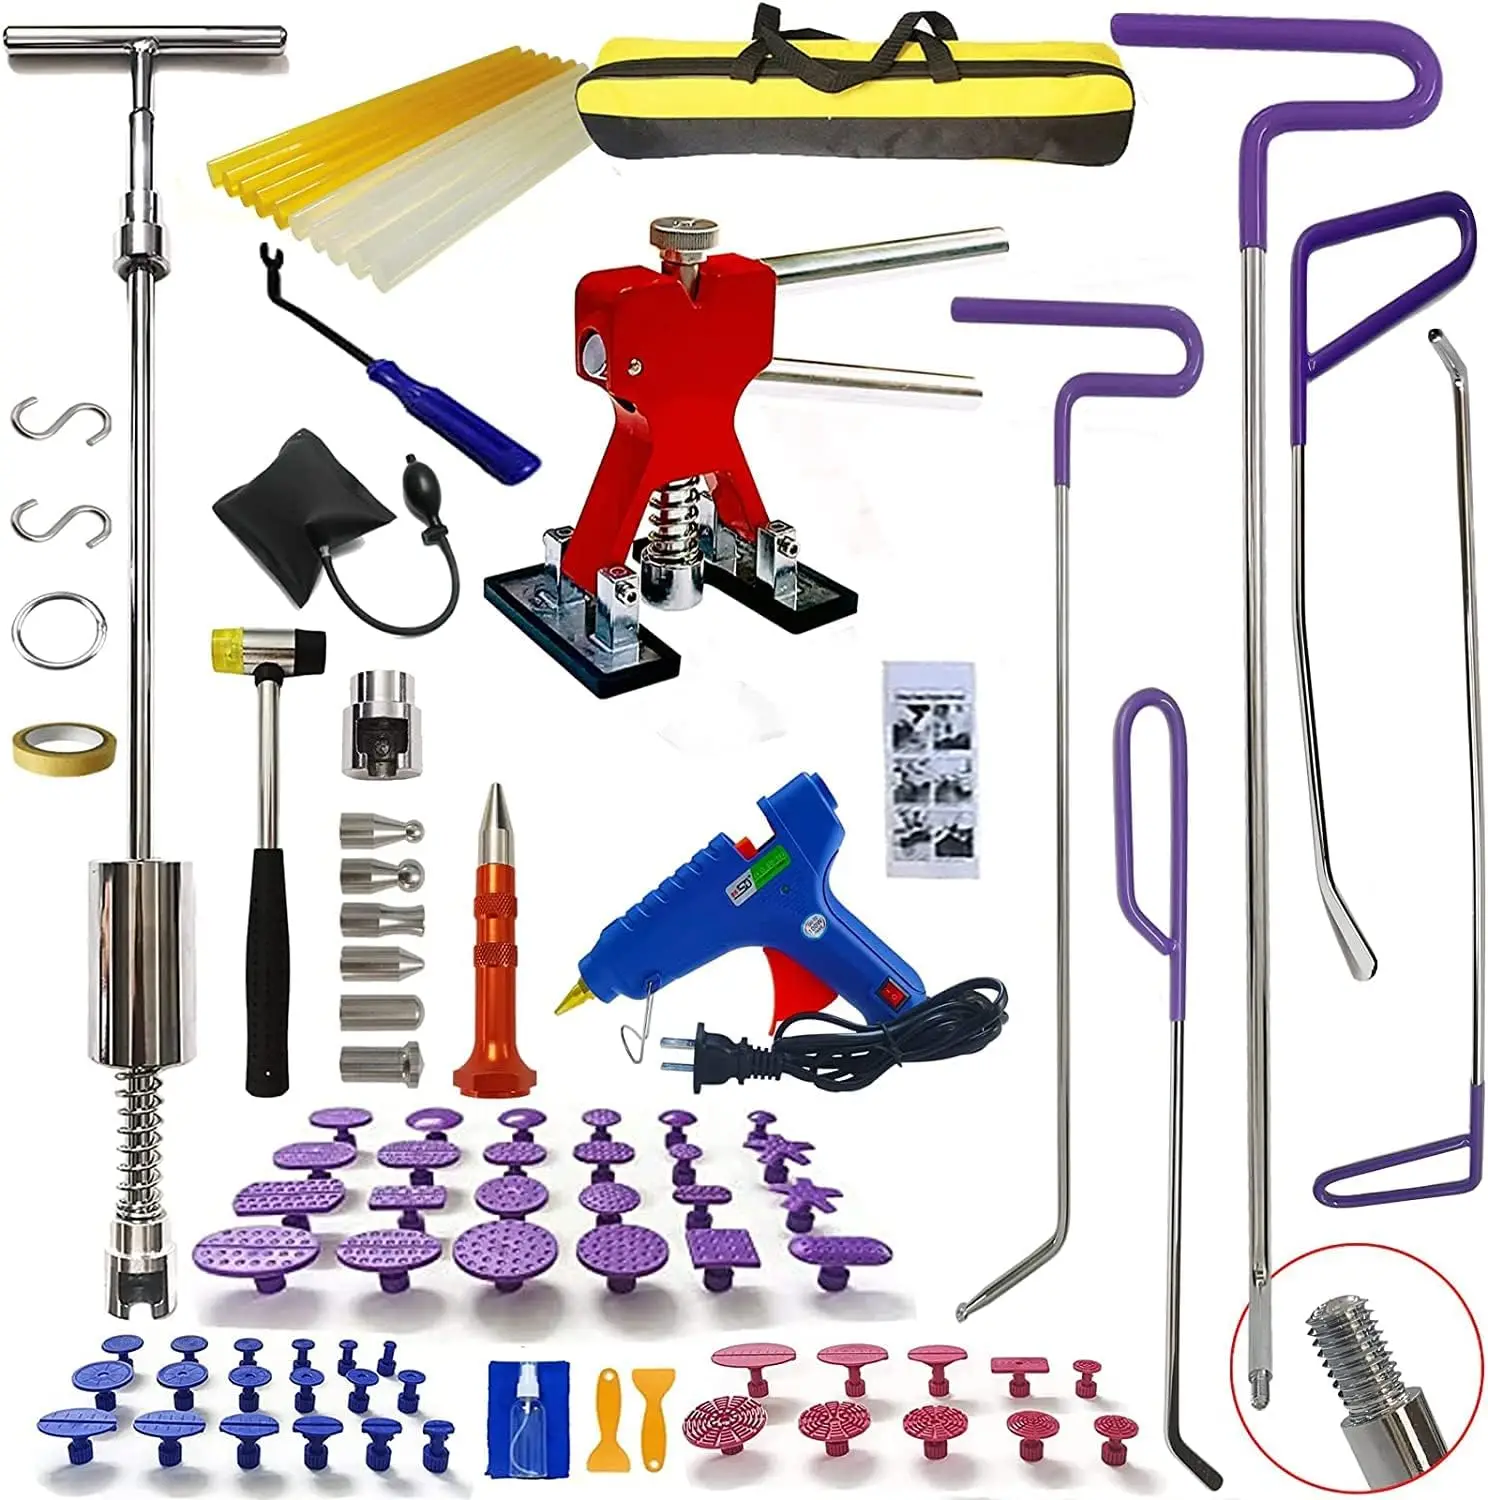 

Car Body Dent Repair Kit, Slide Puller Tabs Hook Rods Hammer Stainless Steel Pen, Car Body Work Glue , Red Dent Lifter and More